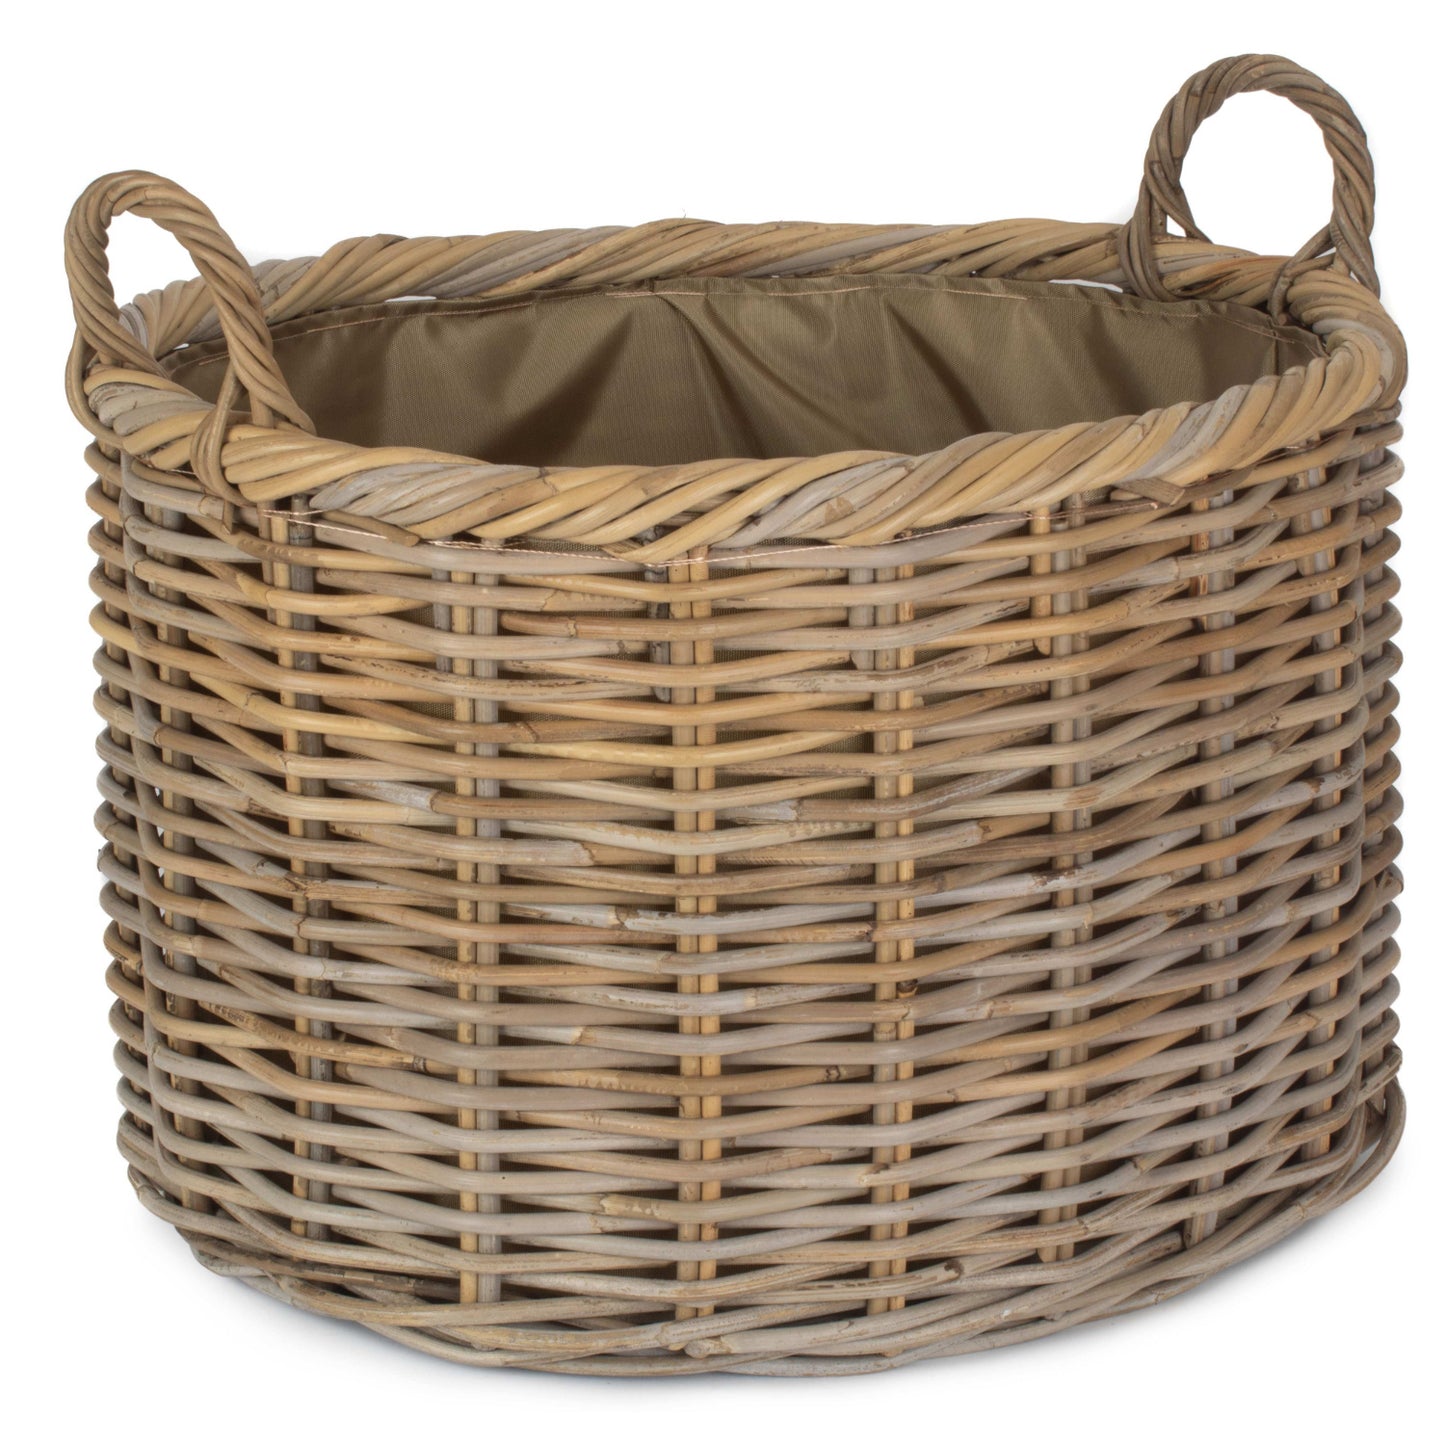 Size 3 Oval Rattan Storage/log Basket With Cordura Lining